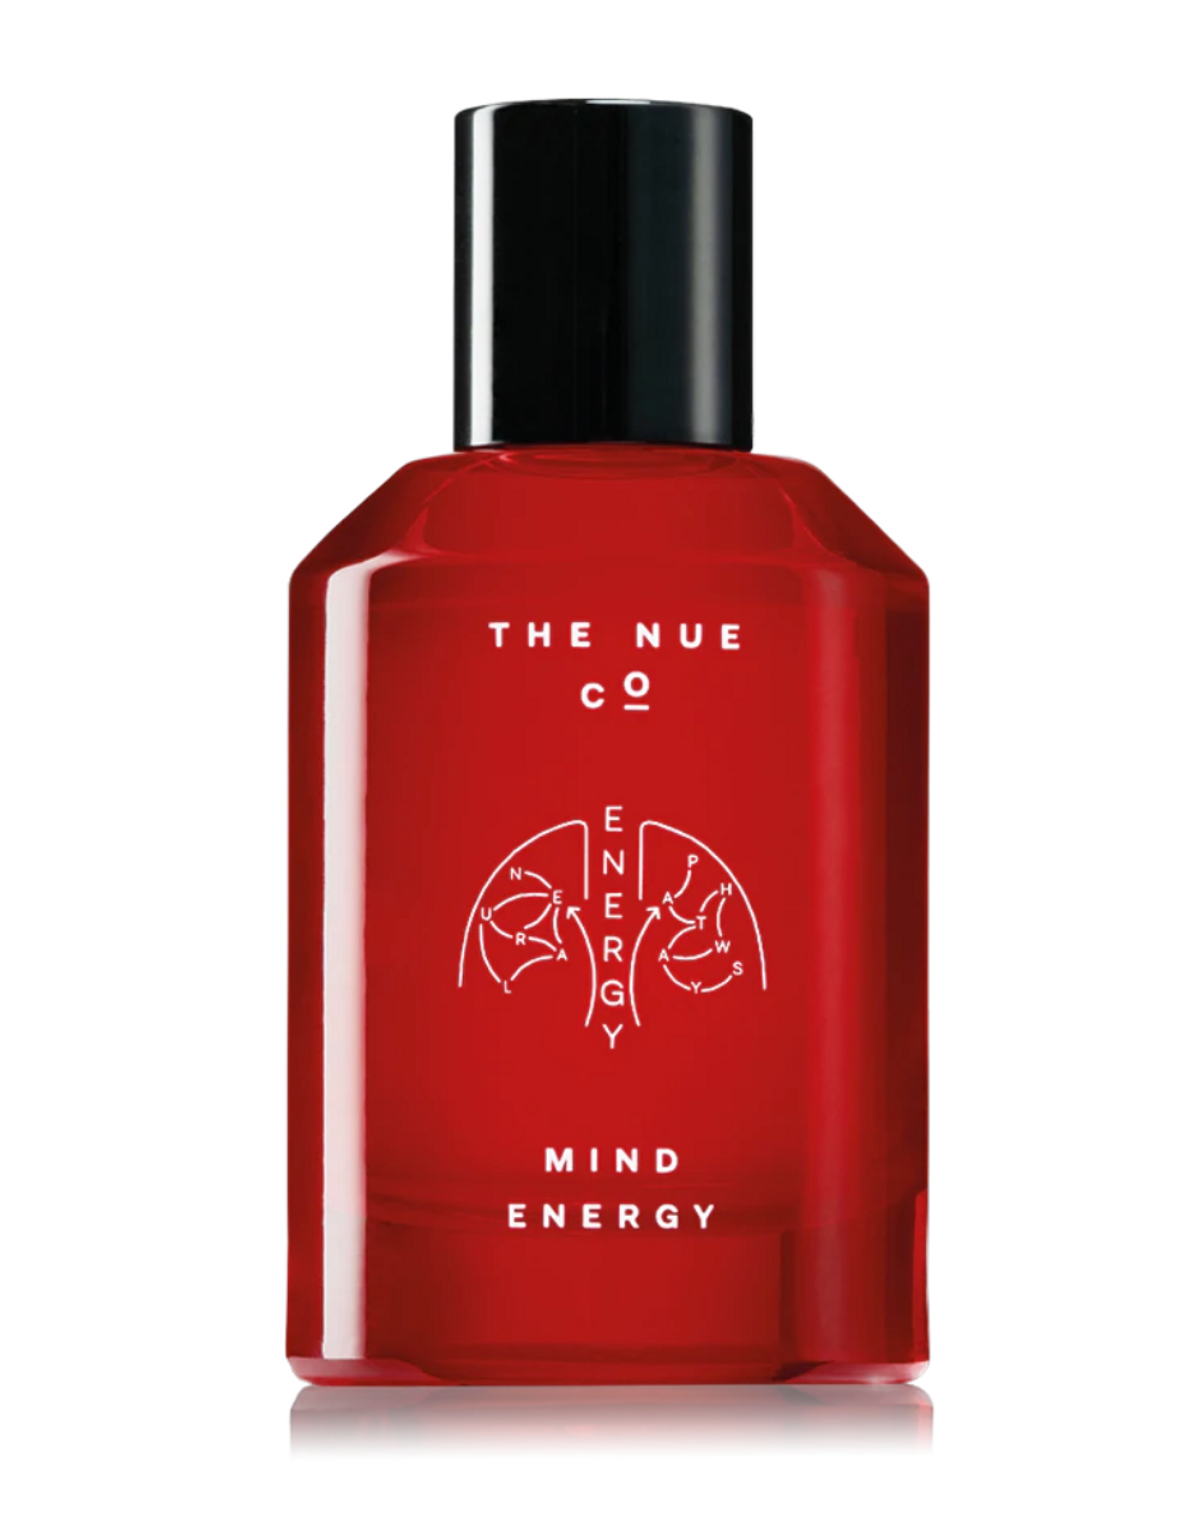 the nue co mind energy fragrance